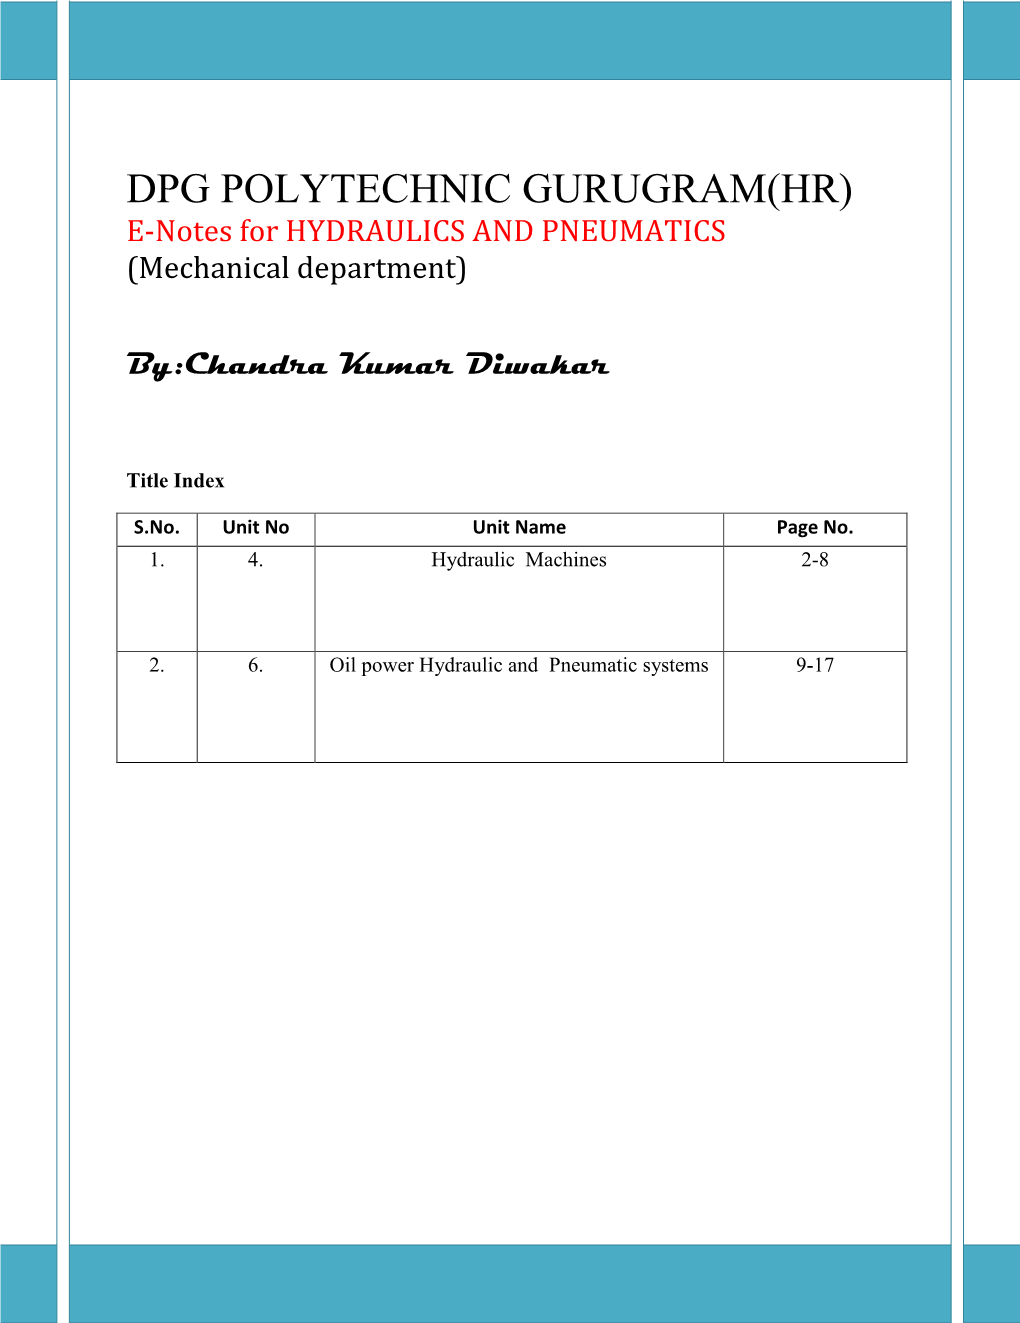 DPG POLYTECHNIC GURUGRAM(HR) E-Notes for HYDRAULICS and PNEUMATICS (Mechanical Department)